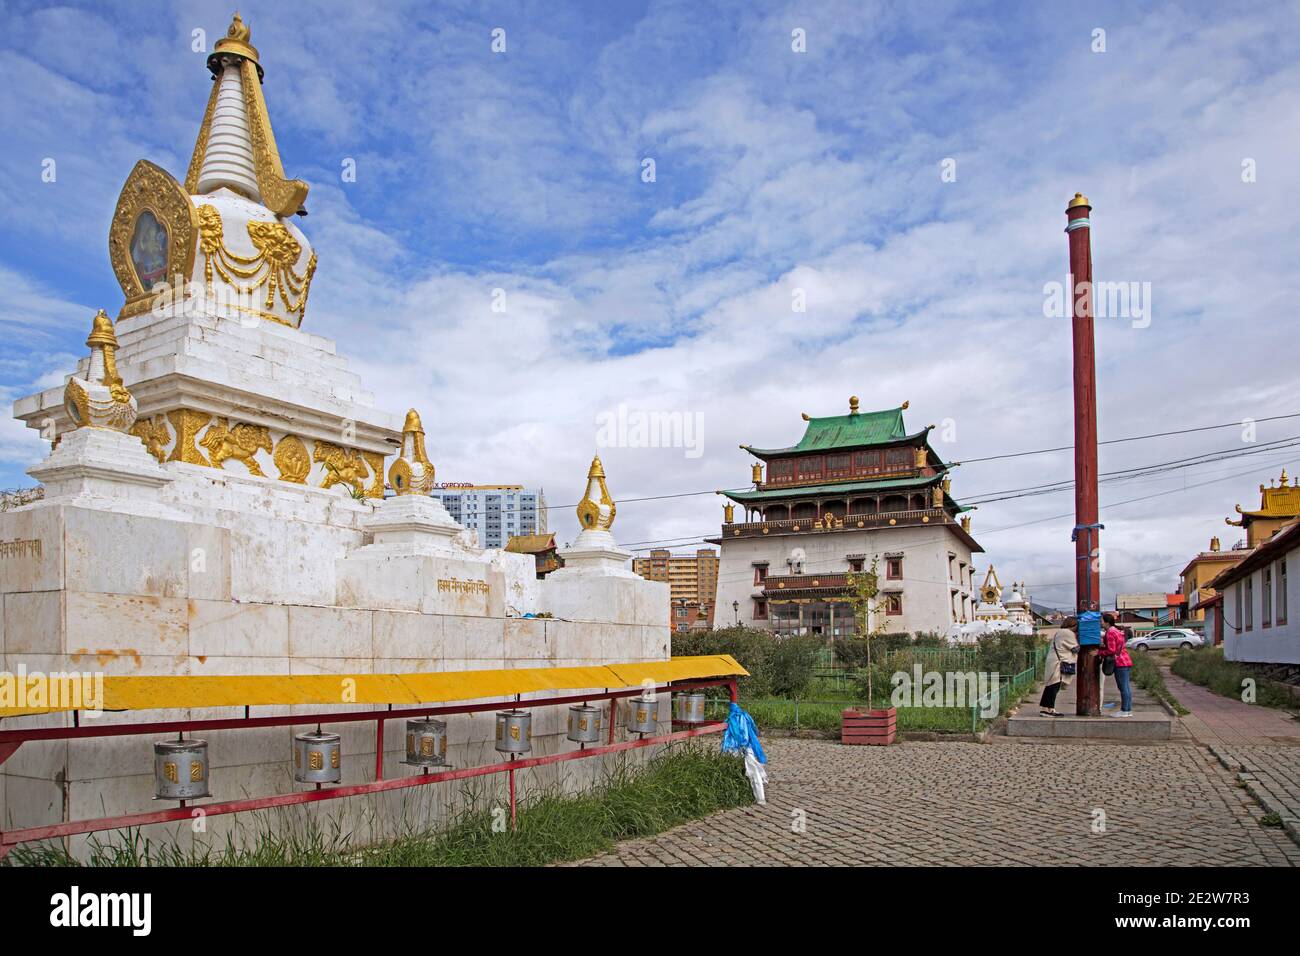 Stupa und Mongolen beten am Pol / Gebetsstelle im Kloster Gandantegchinlen in der Hauptstadt Ulaanbaatar / Ulan Bator, Mongolei Stockfoto